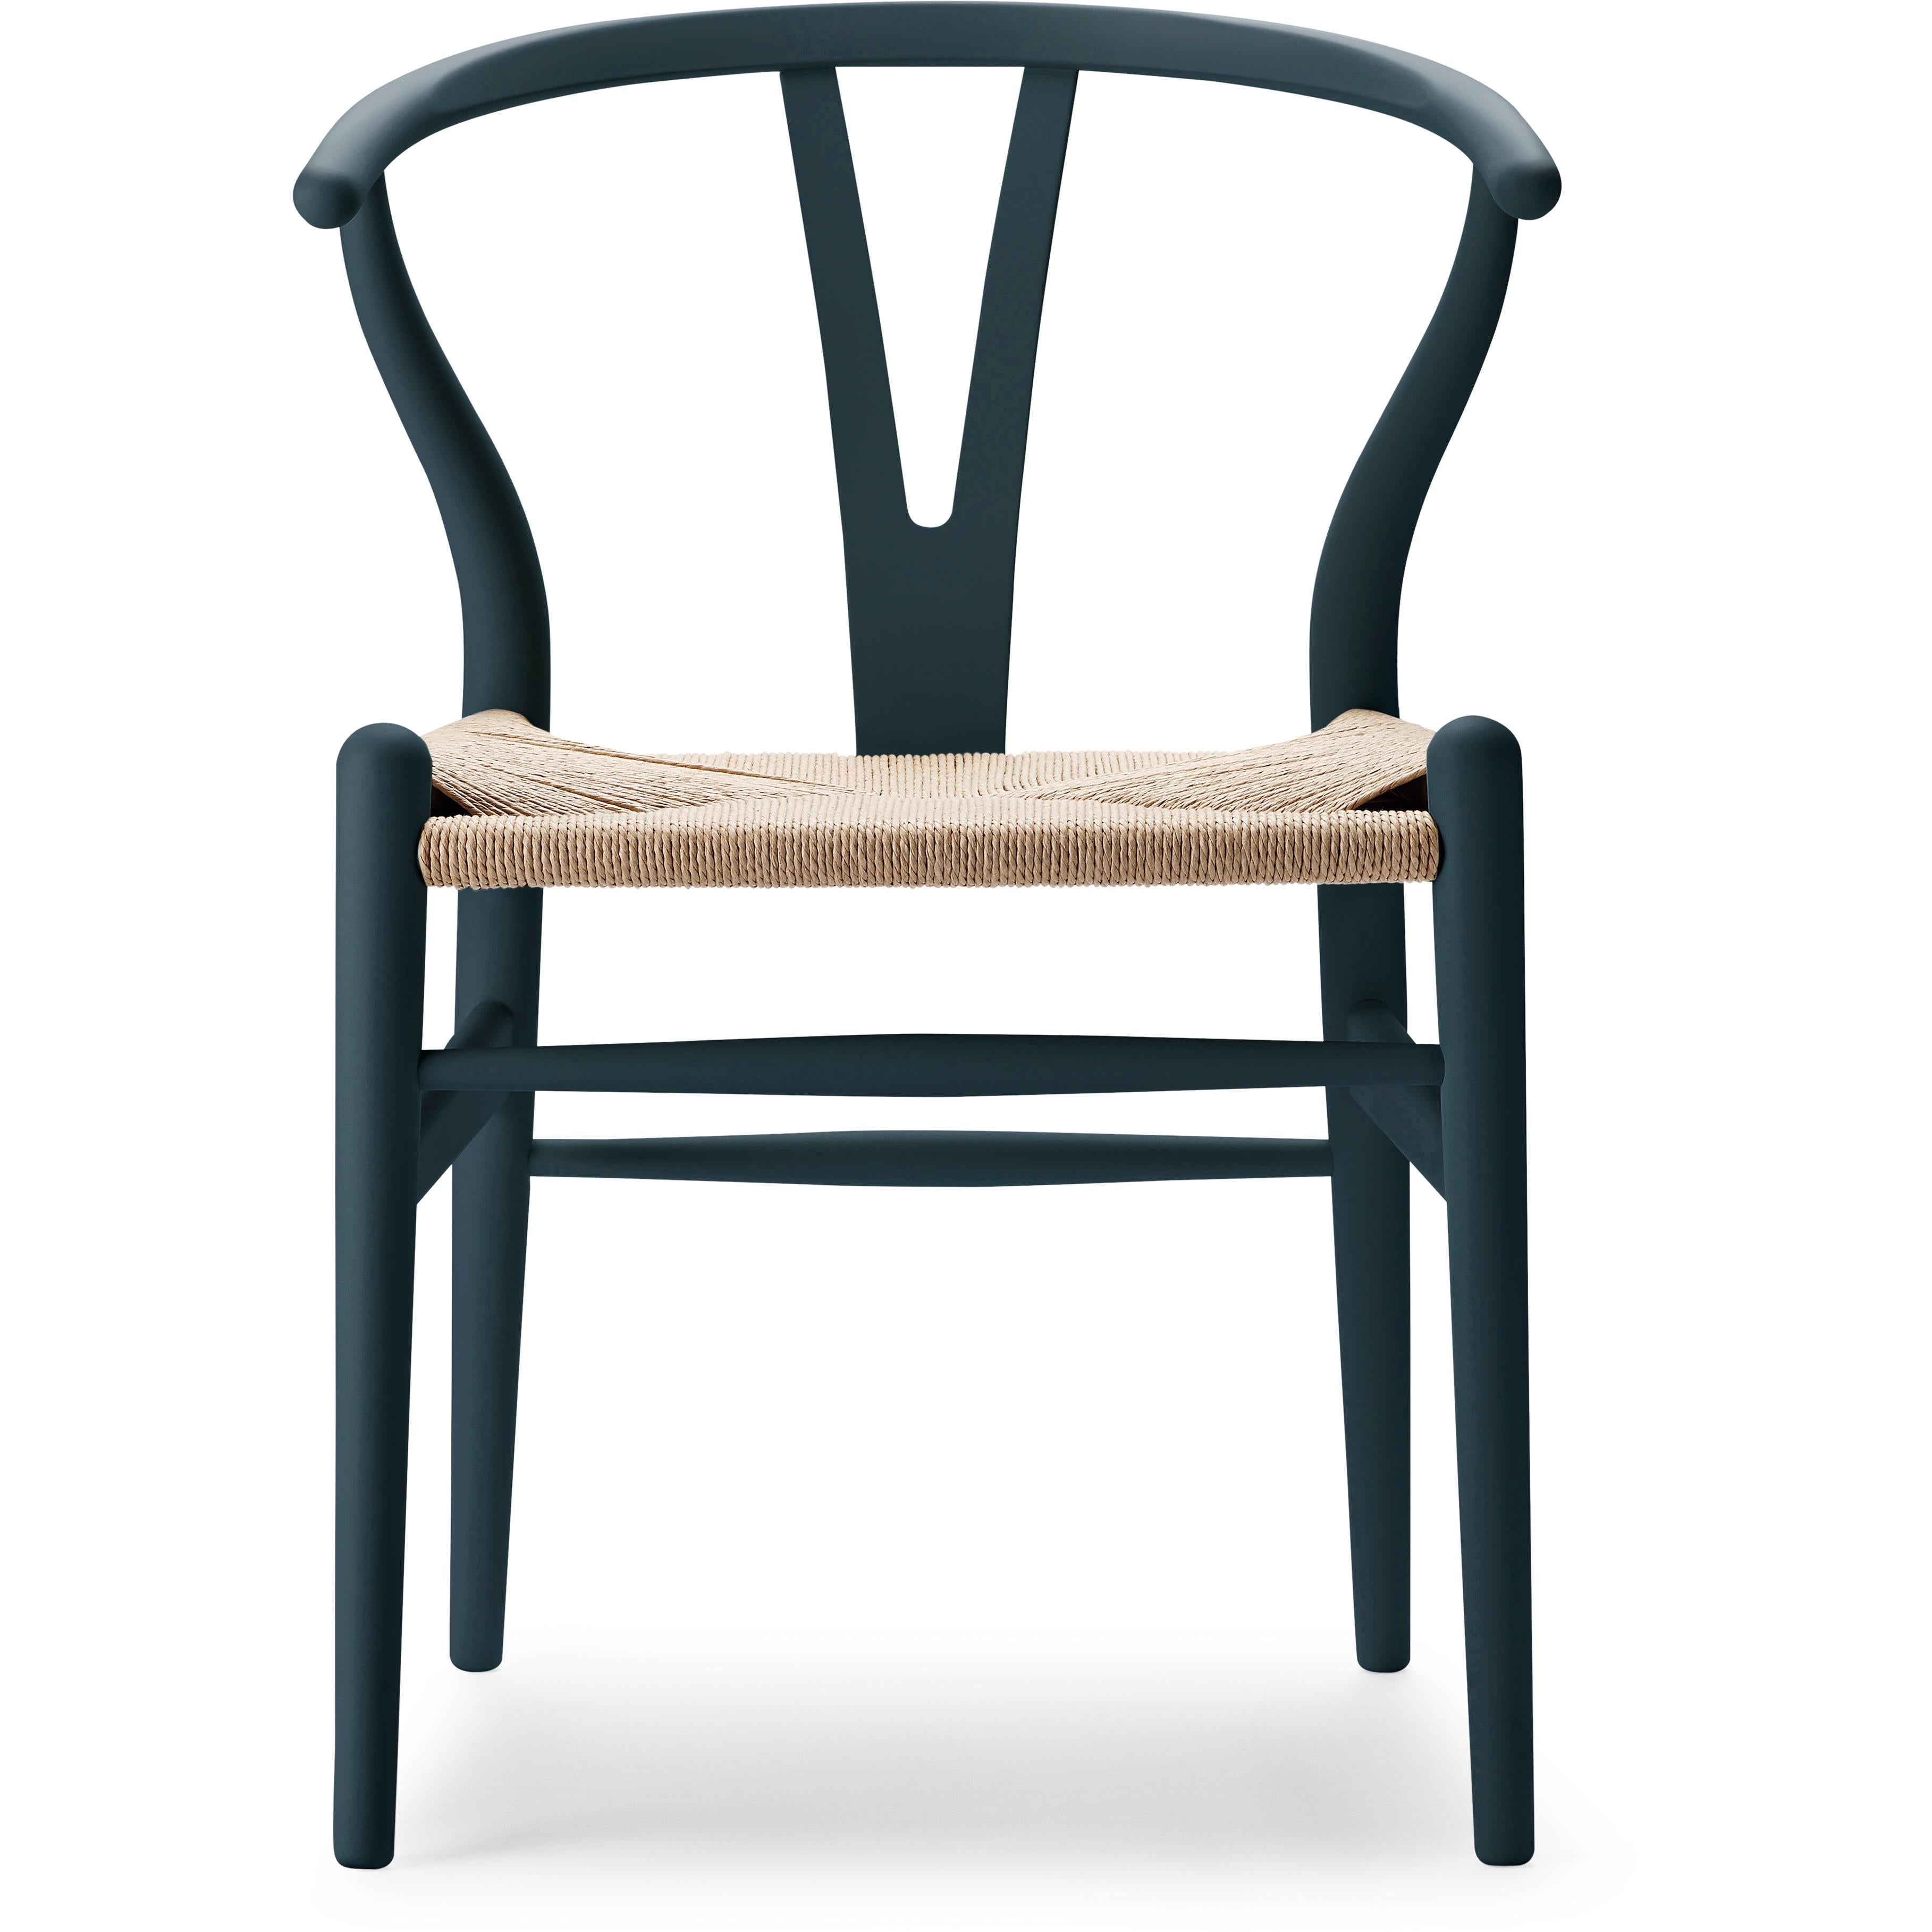 Carl Hansen CH24 Soft Y -Chair Beech, North Sea - Special Edition